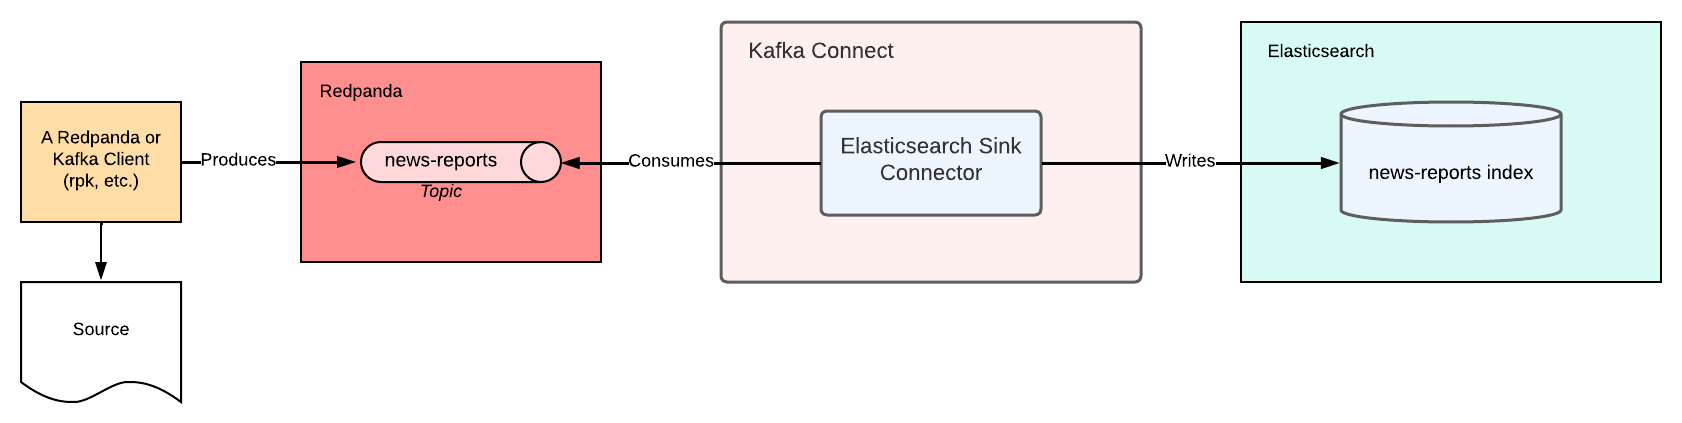 elasticsearch connector